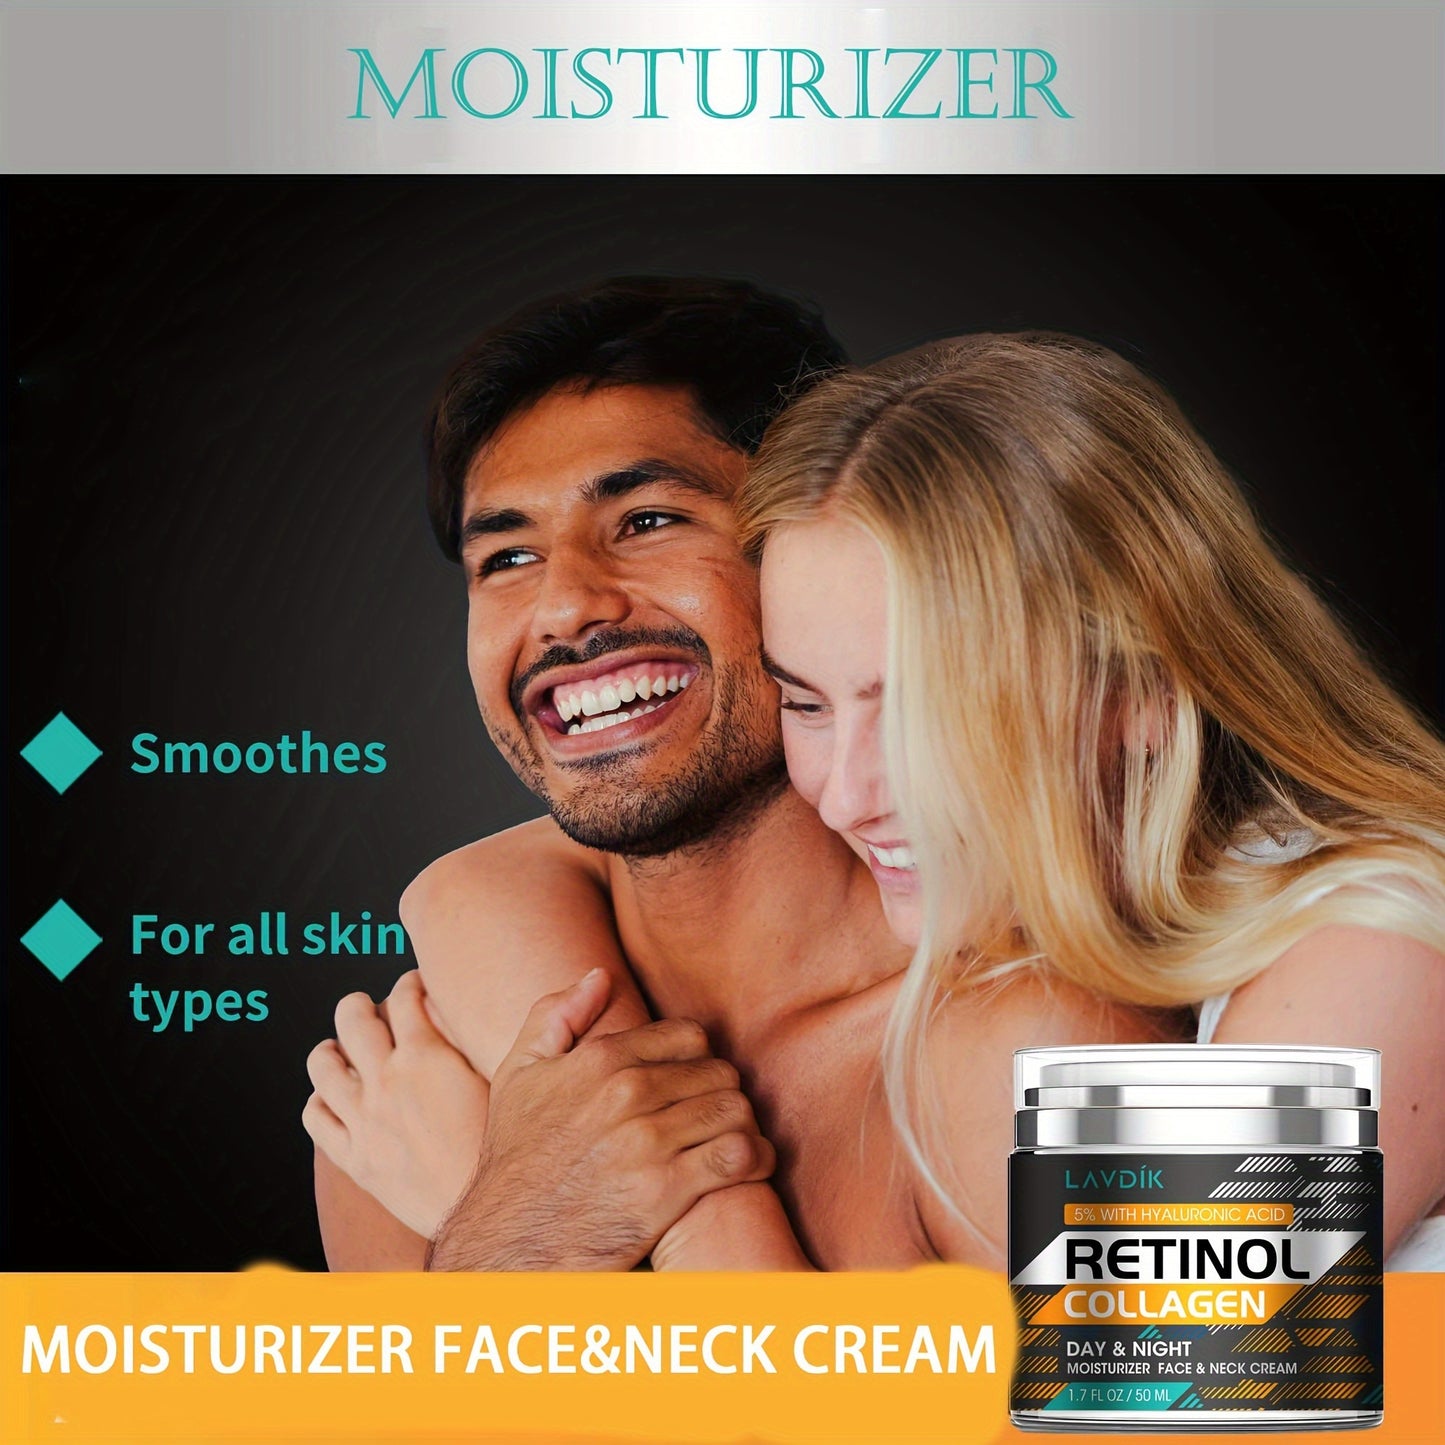 Retinol Cream For Face, Face Moisturizer Collagen Cream, Face Cream With Retinol & Hyaluronic Acid for fine line Wrinkles, & Dark Spots - Natural Wrinkle Moisturizer For Women And Men - Day & Night Face Cream -1.7oz